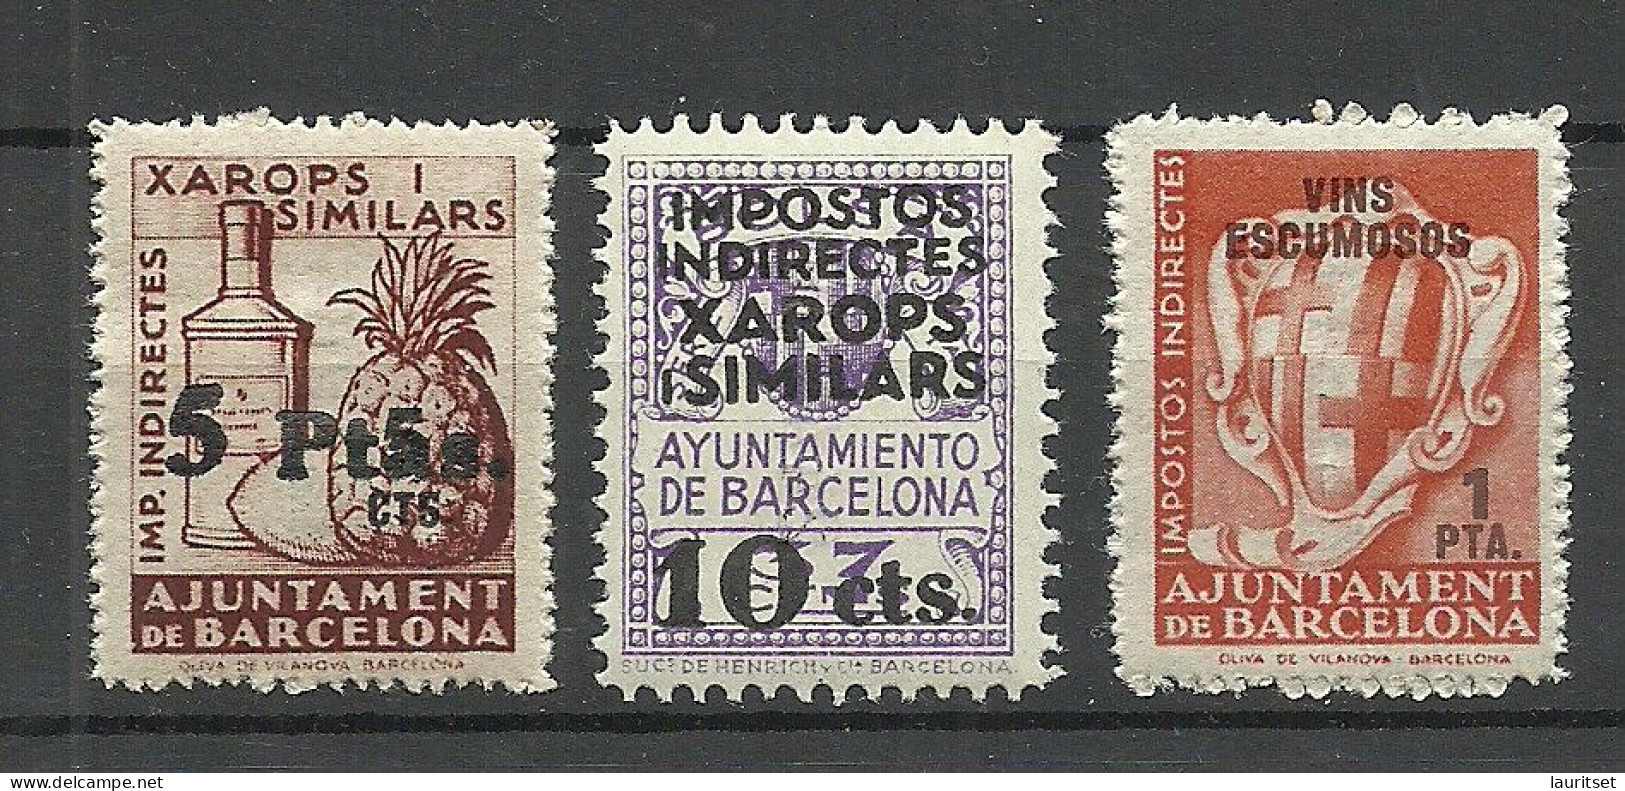 SPAIN Espana 1930ies Barcelona Local Issue Tax Revenue Taxe  Alcohol Tax, 3 Pcs,  MNH - Barcelona